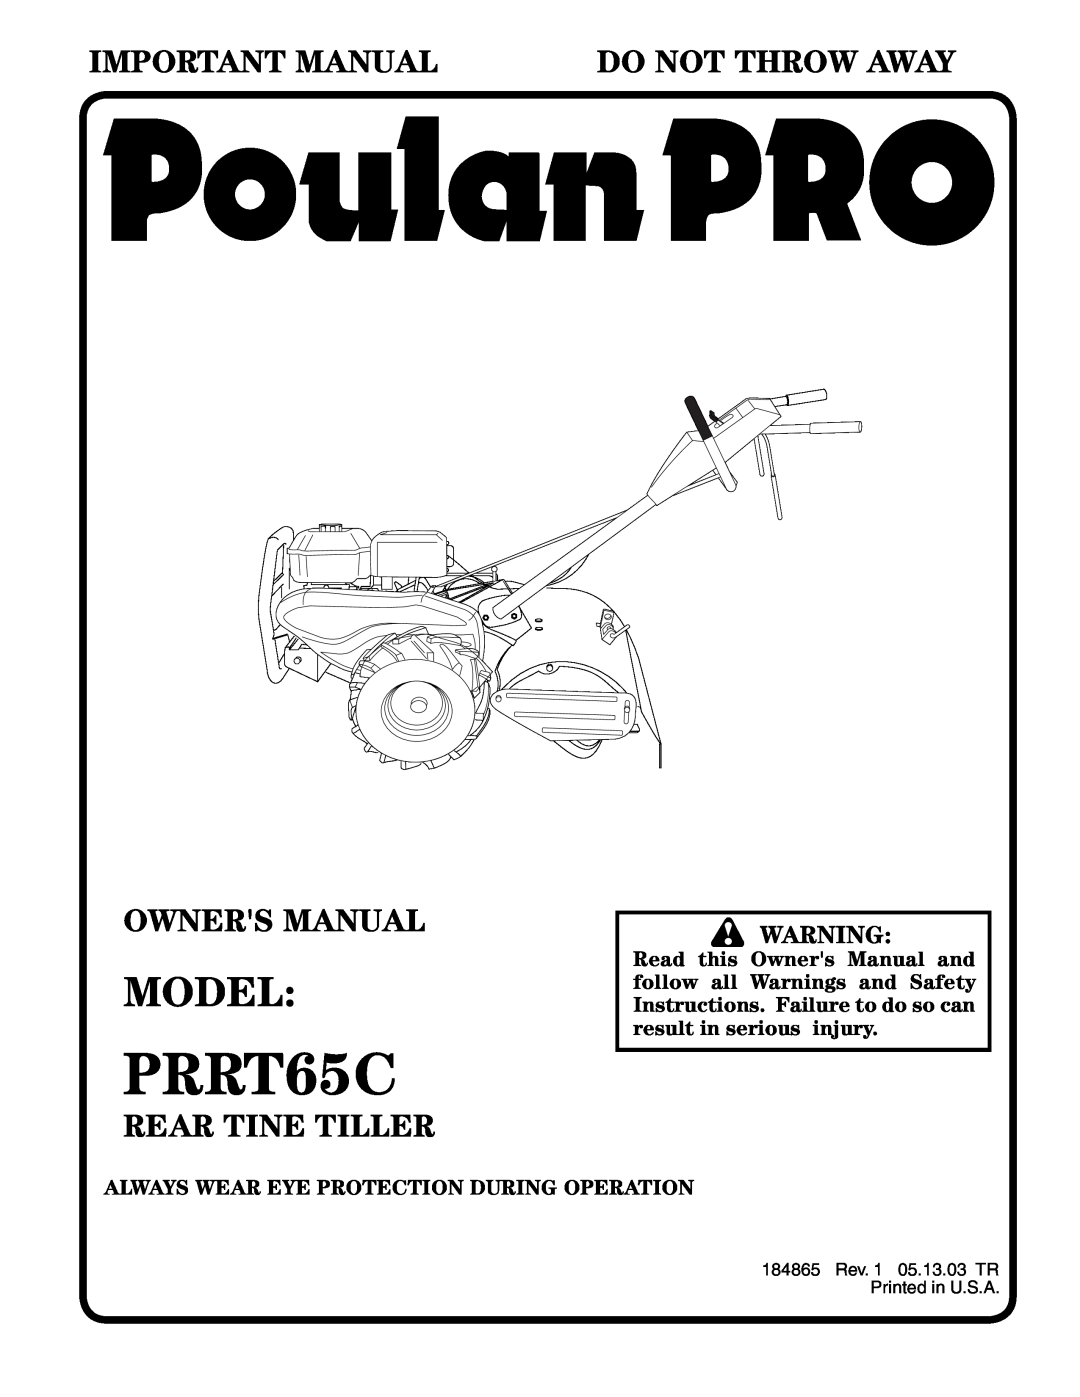 Poulan 184865 owner manual Model, PRRT65C, Important Manual, Rear Tine Tiller, Do Not Throw Away 